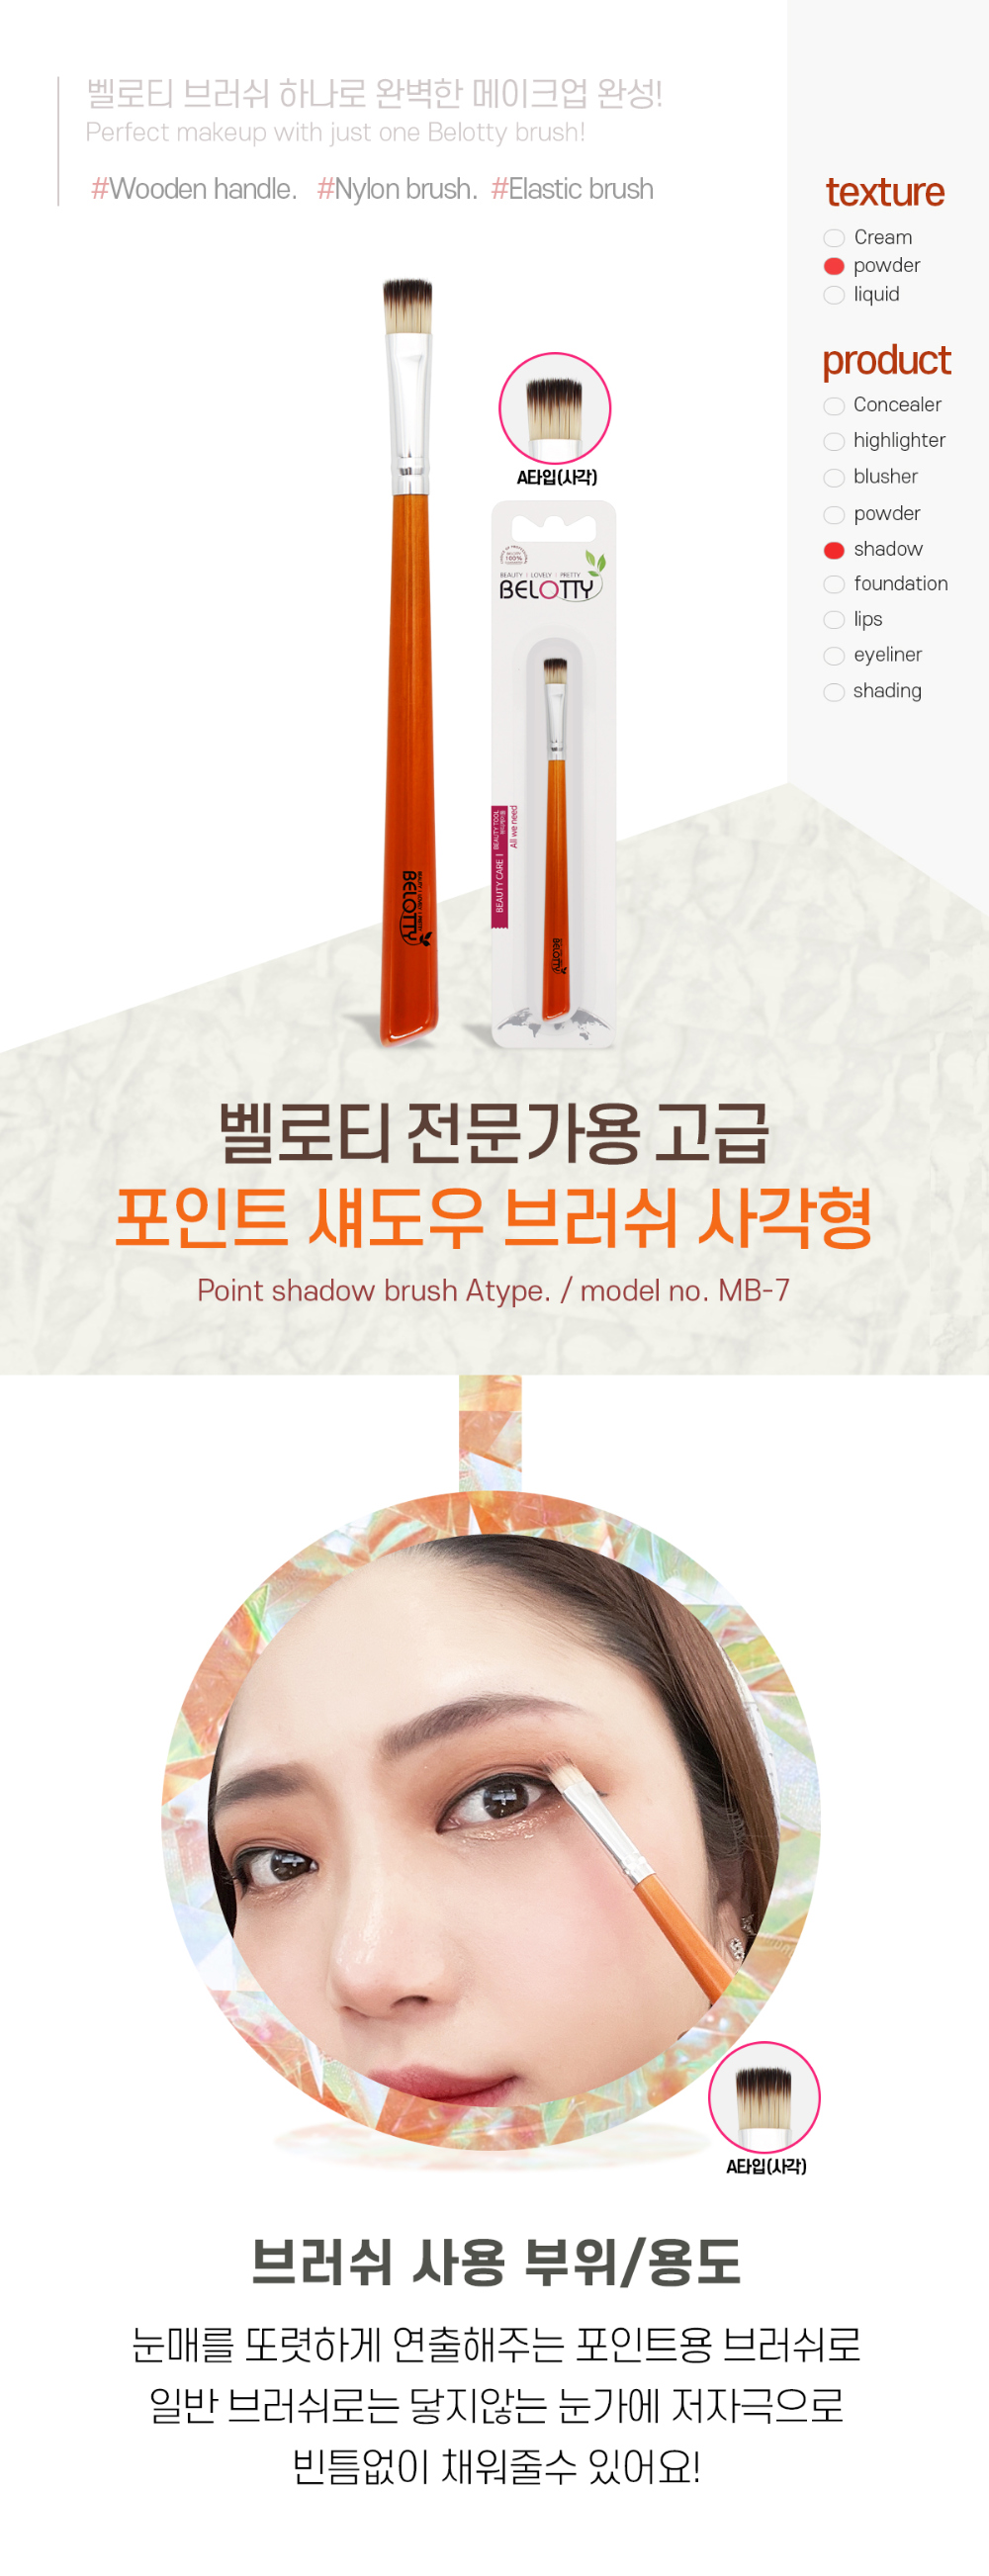 cosmetics product image-S33L1